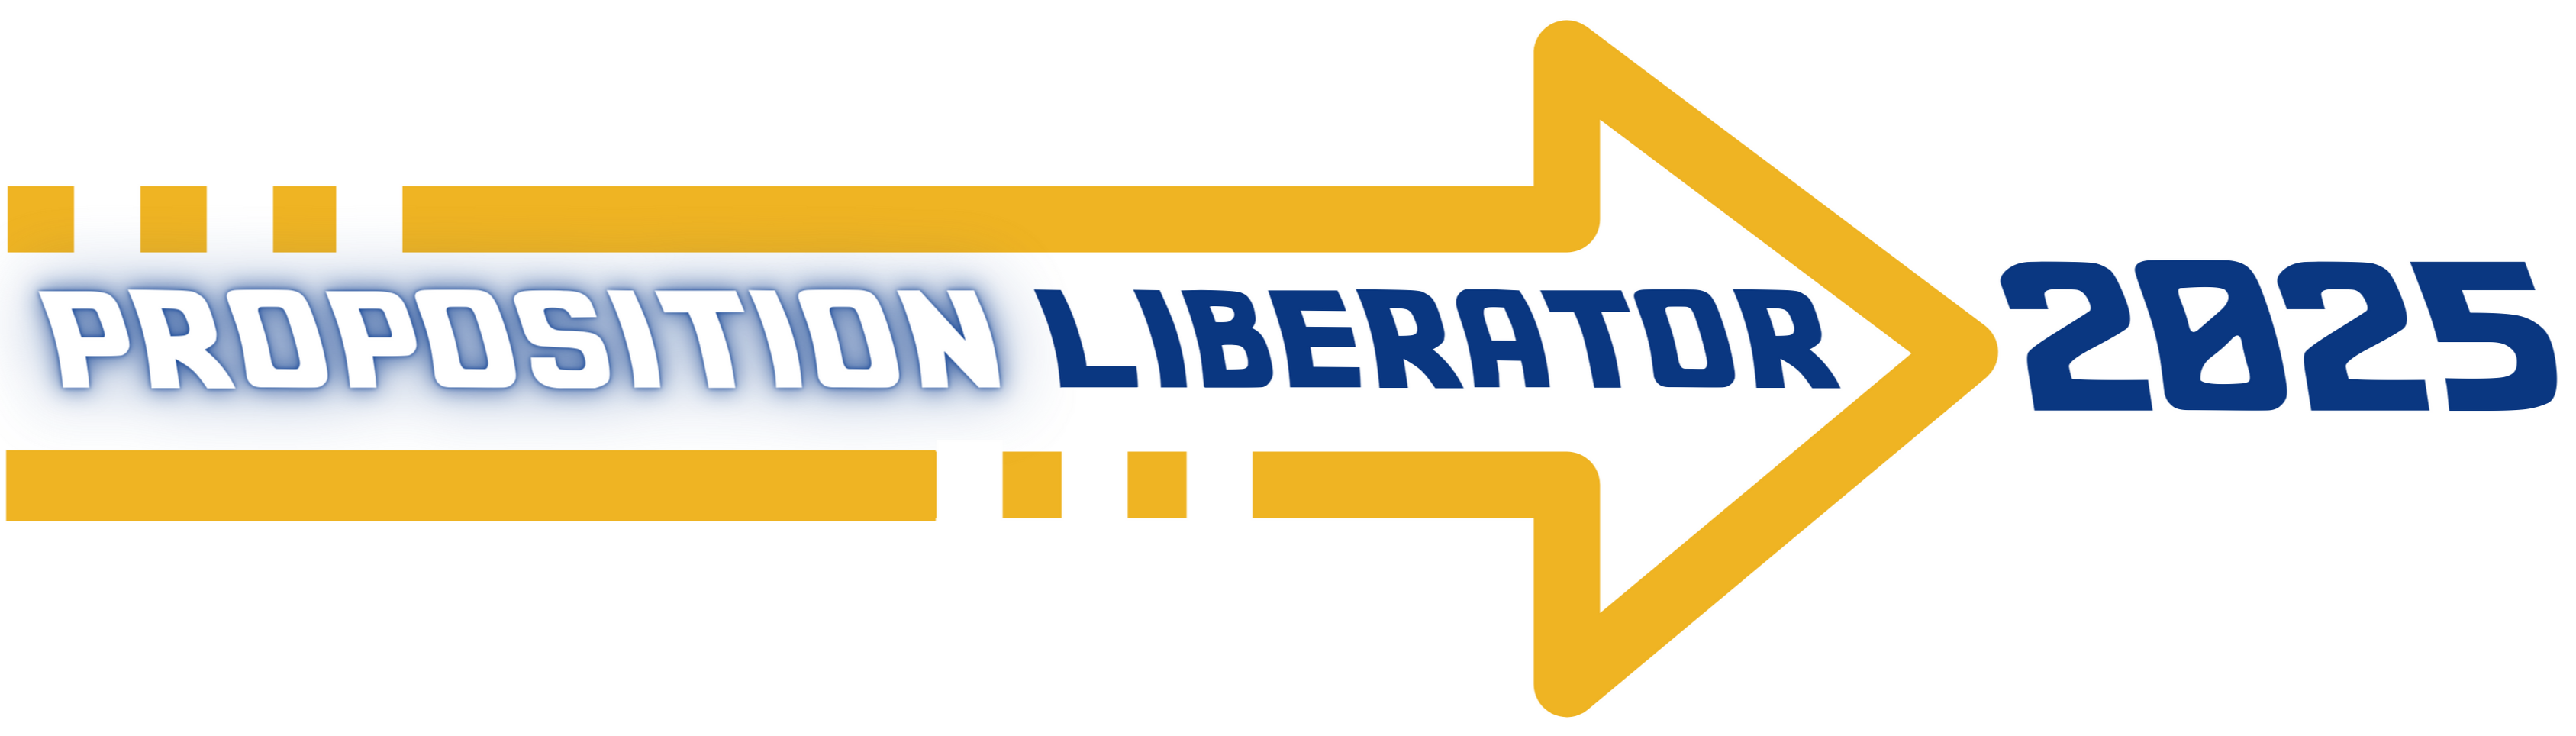 Proposition Liberator 2025